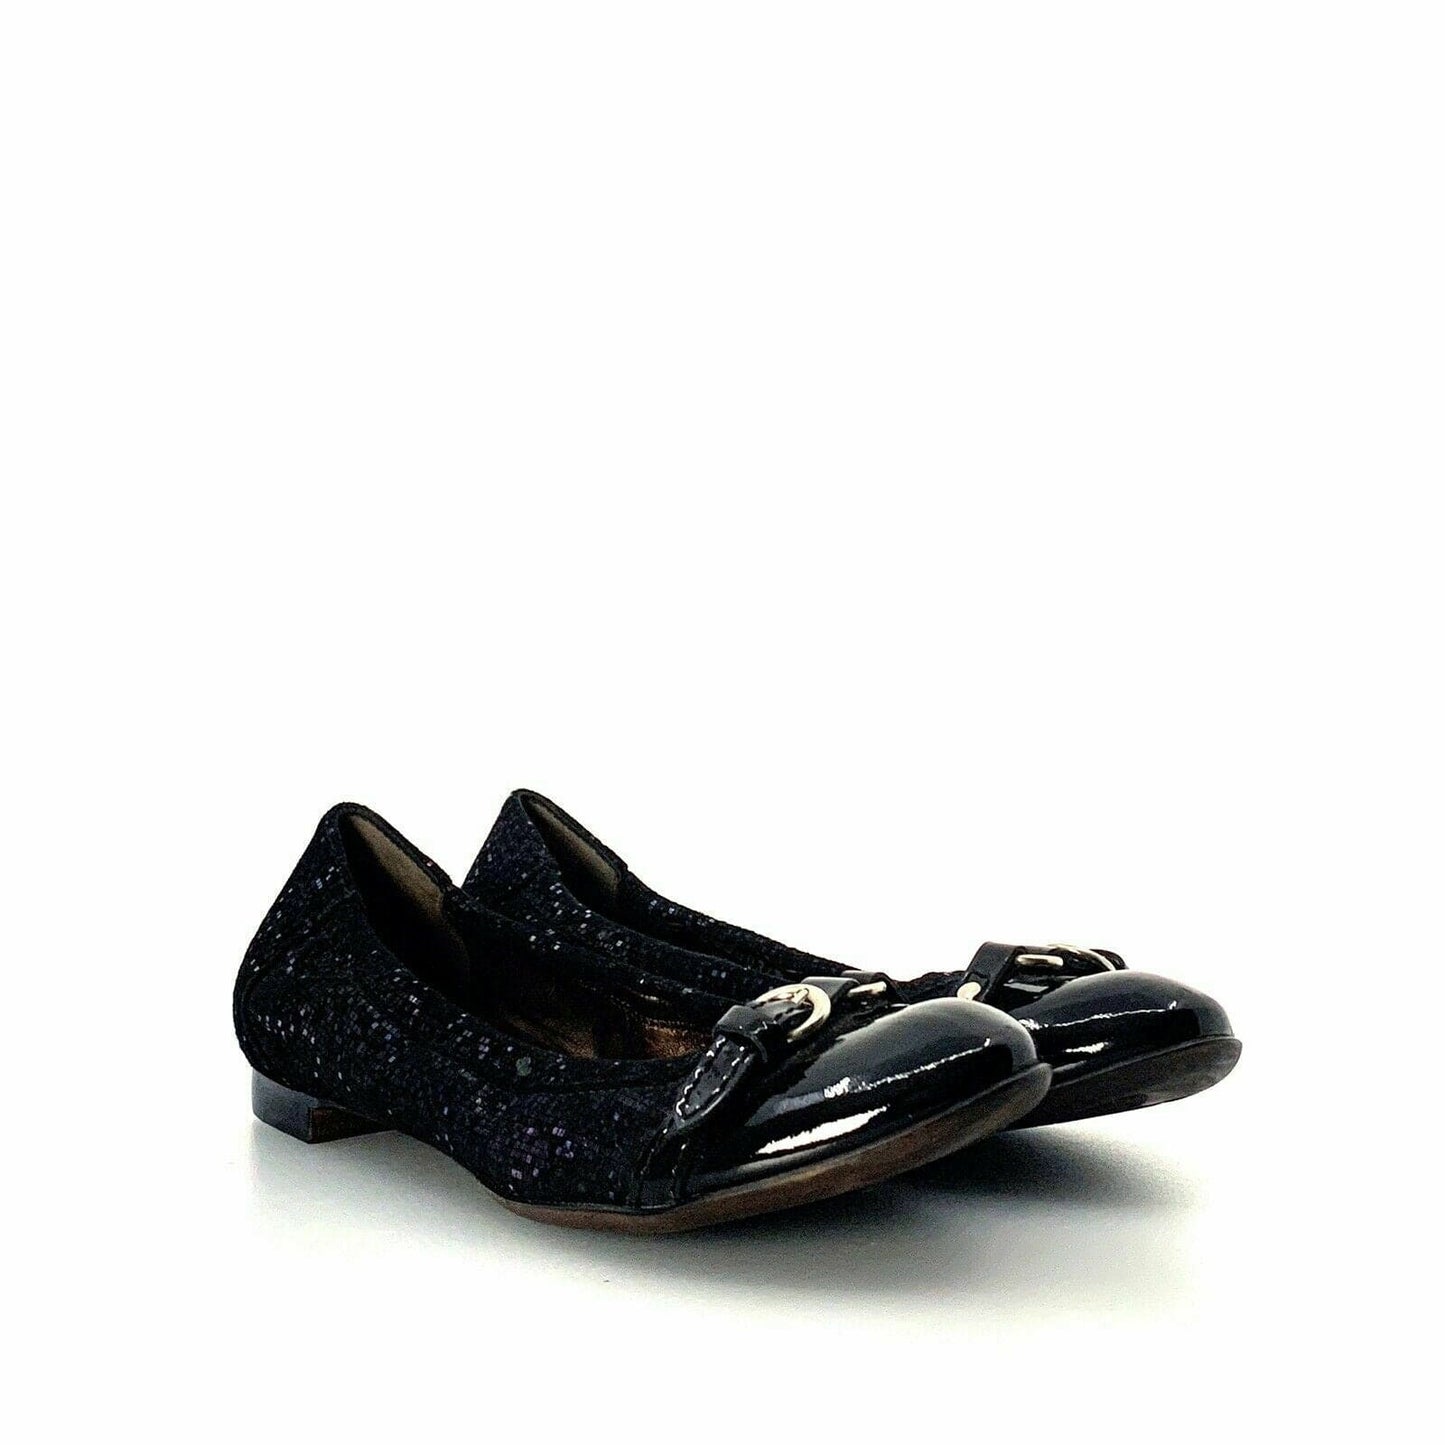 Attilio Giusto Leombruni Womens Size 5.5 Black Patent Leather Ballet Flats Shoes